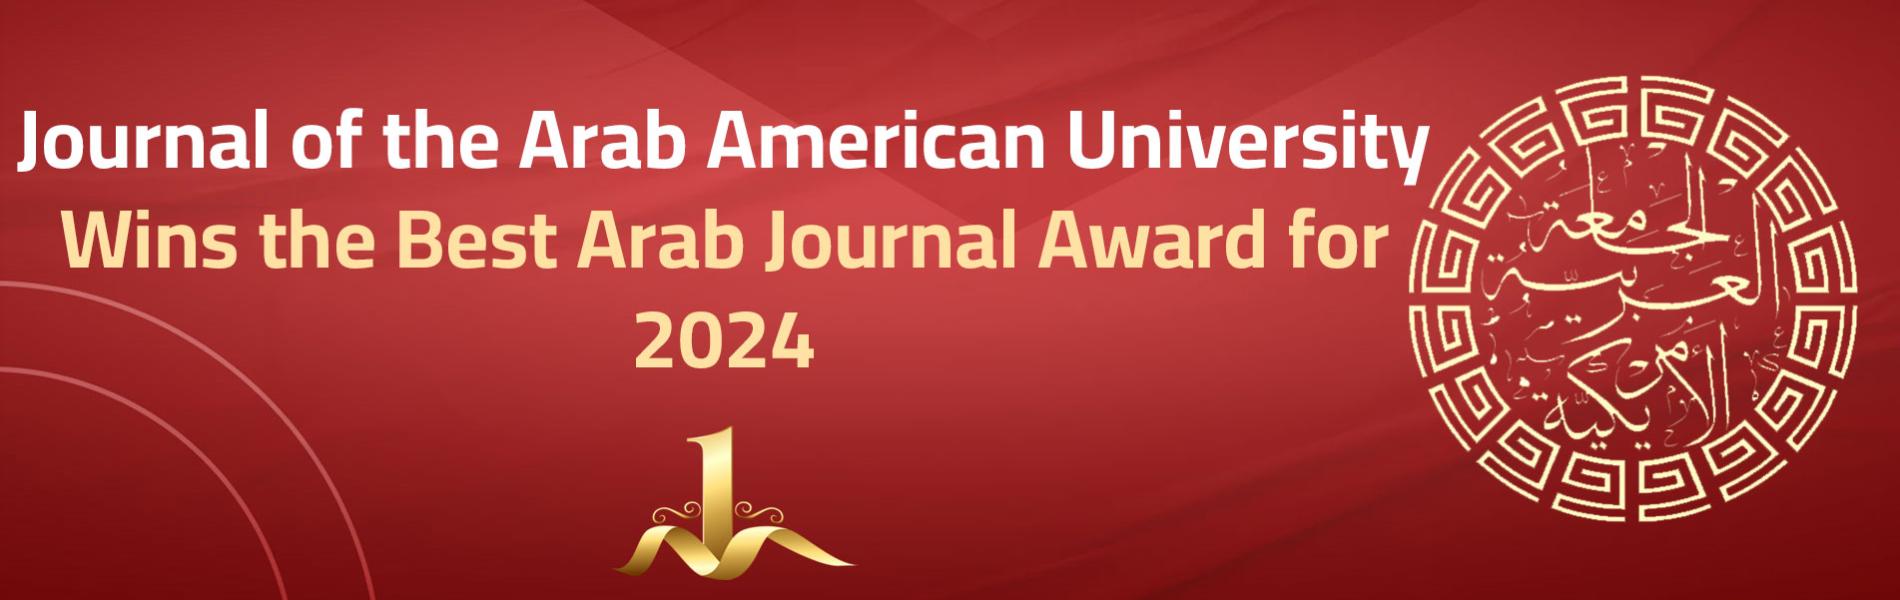 Journal of the Arab American University Wins the Best Arab Journal Award for 2024